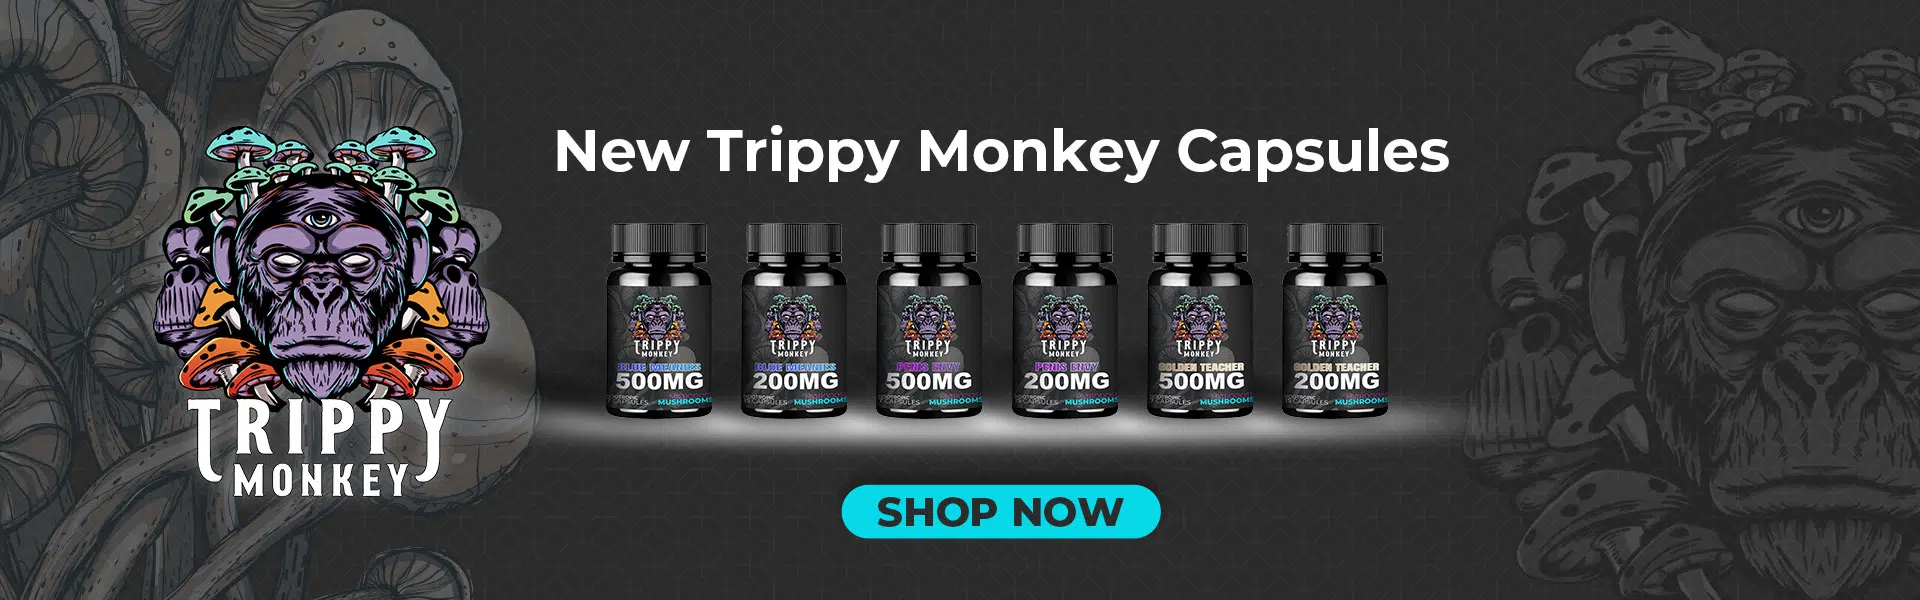 Trippy Monkey Capsule Banner 1920x600 1